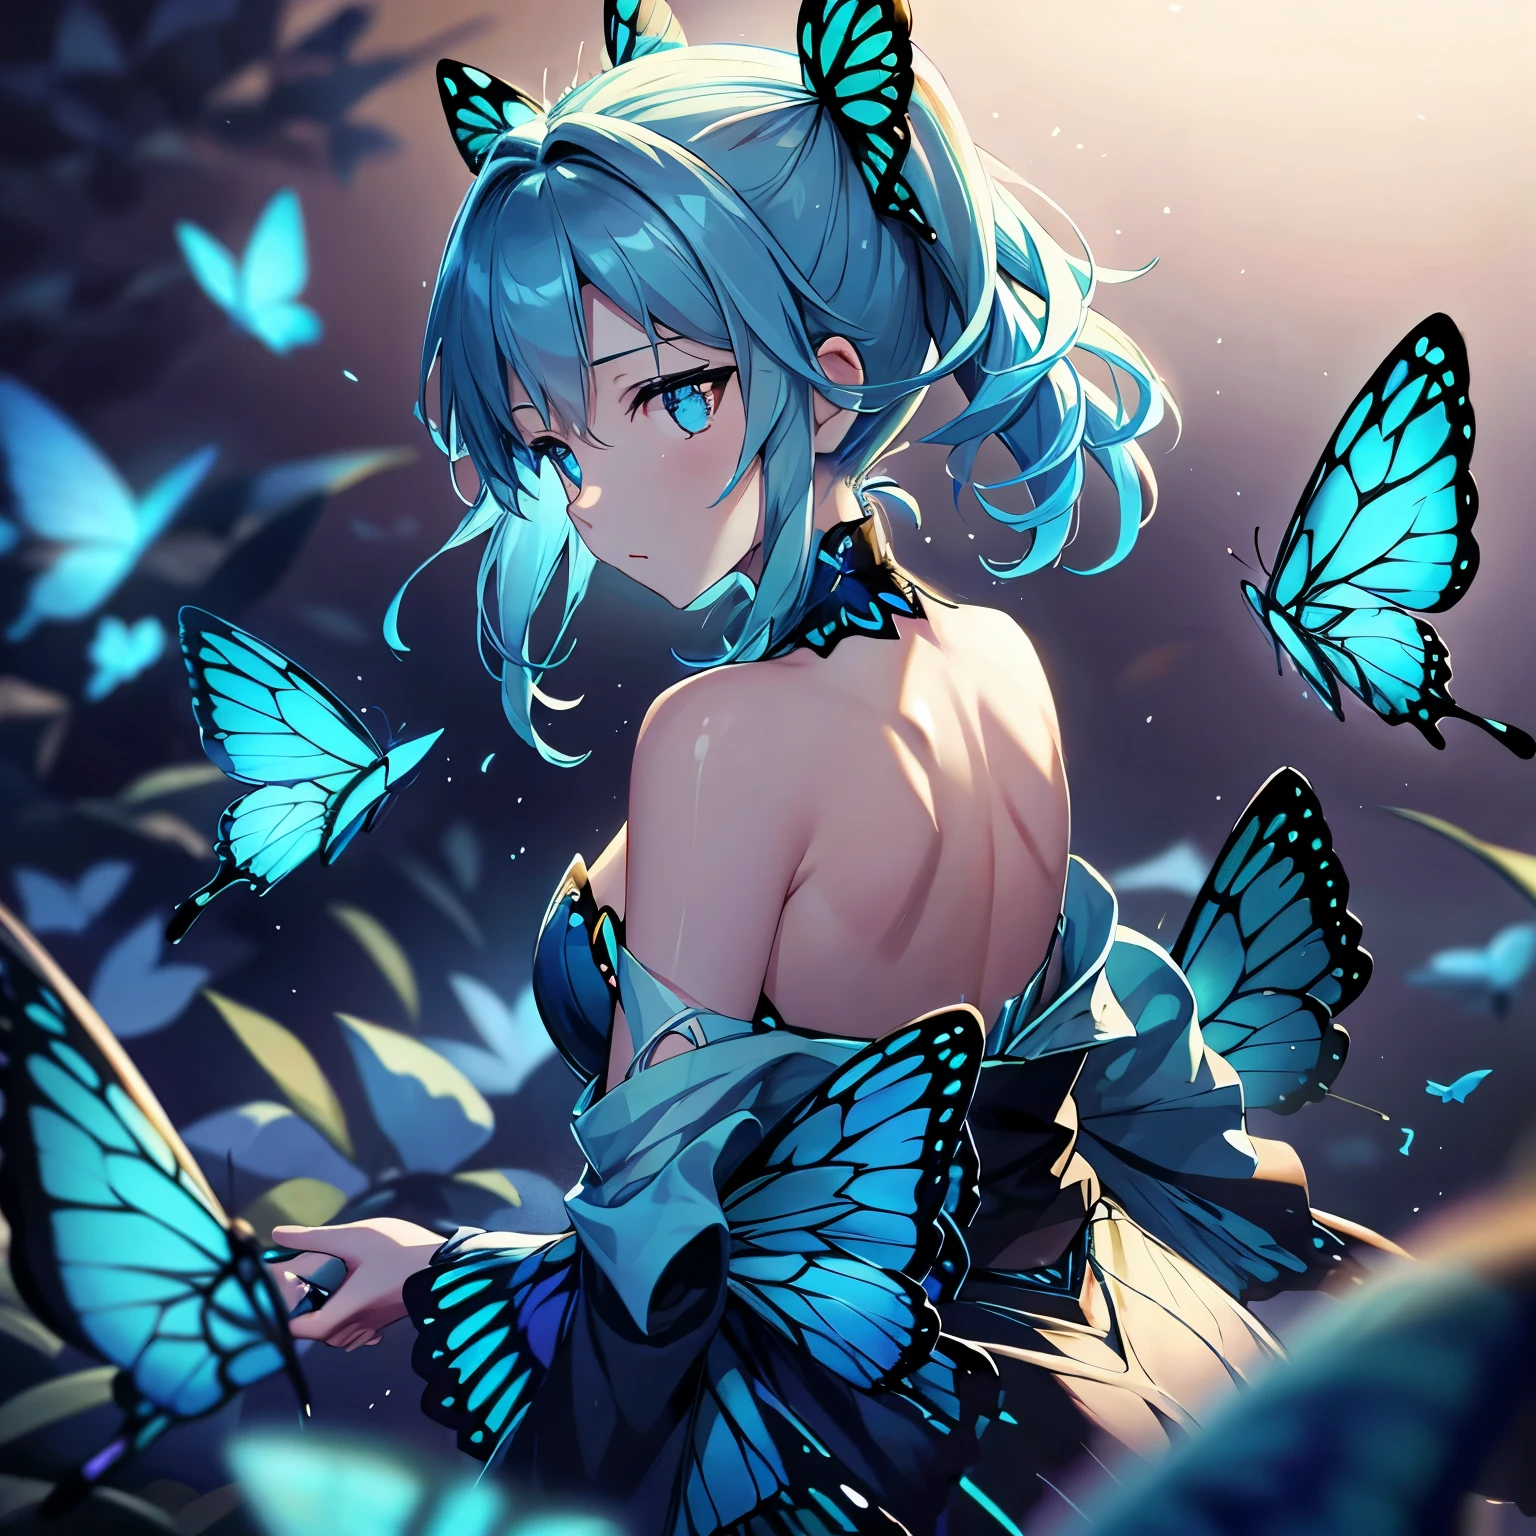 Muitas borboletas azuis, quaisquer borboletas azuis voando ao fundo、Luz neon